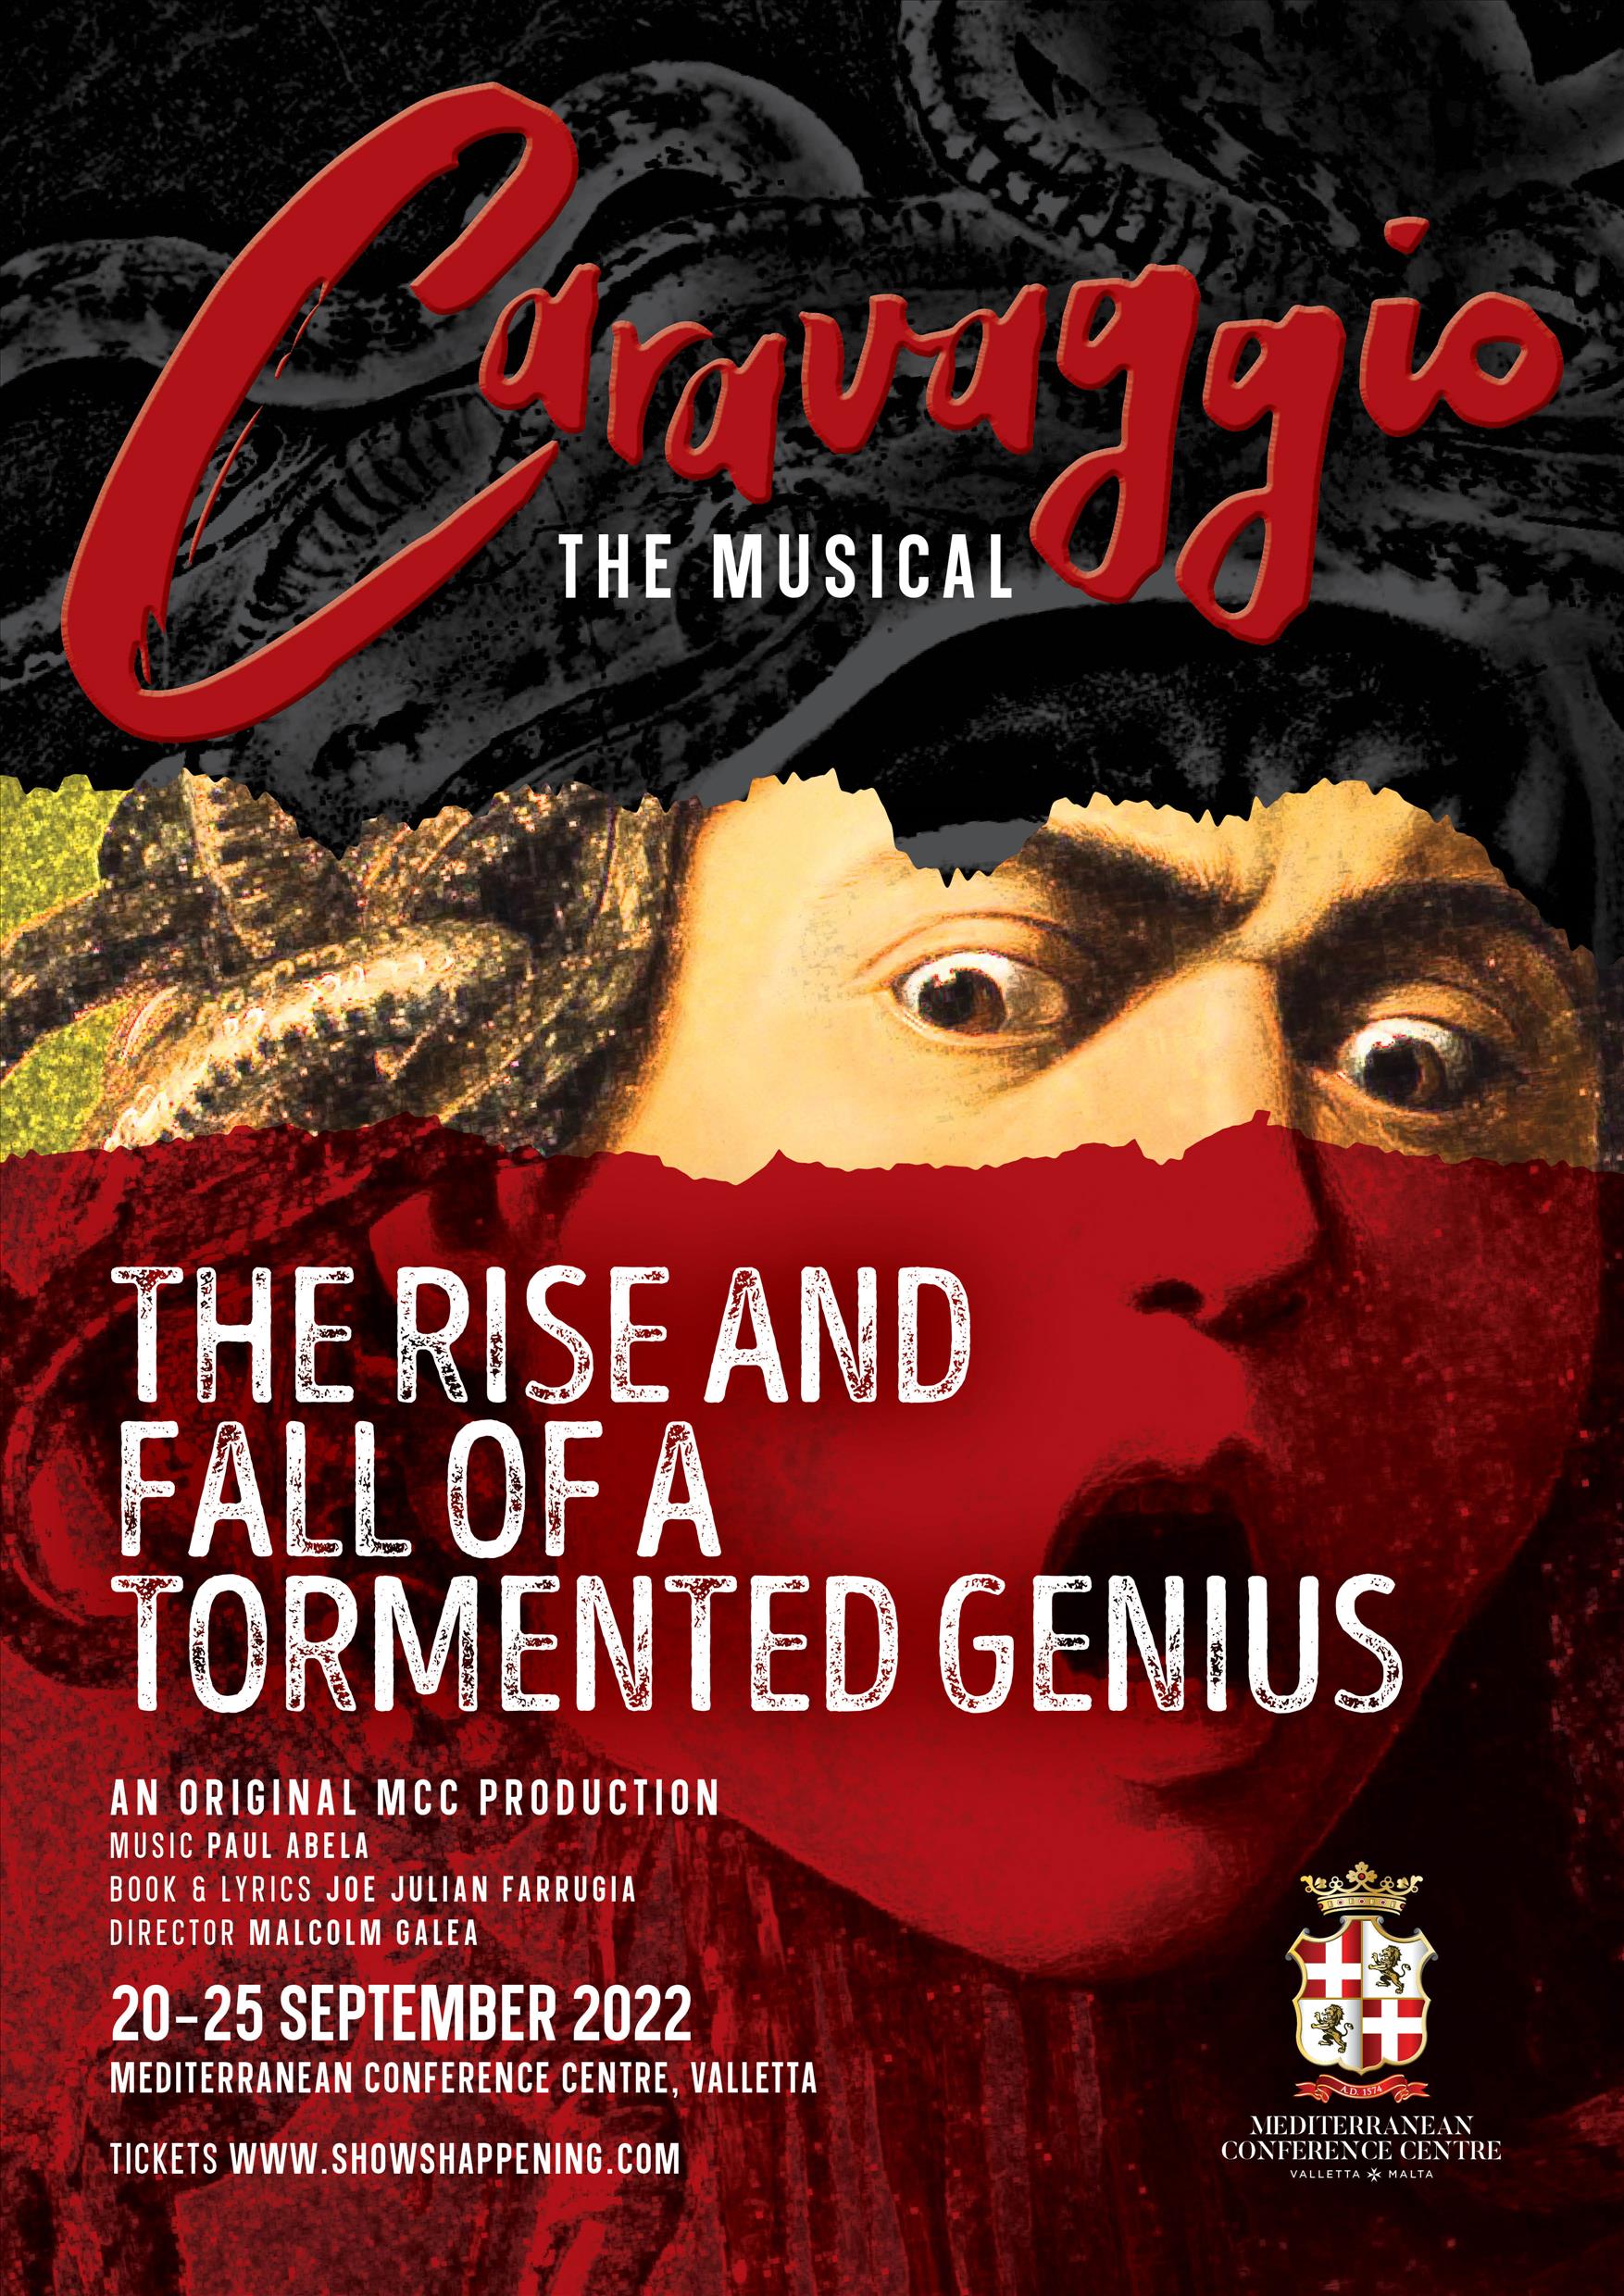 Caravaggio The Musical poster